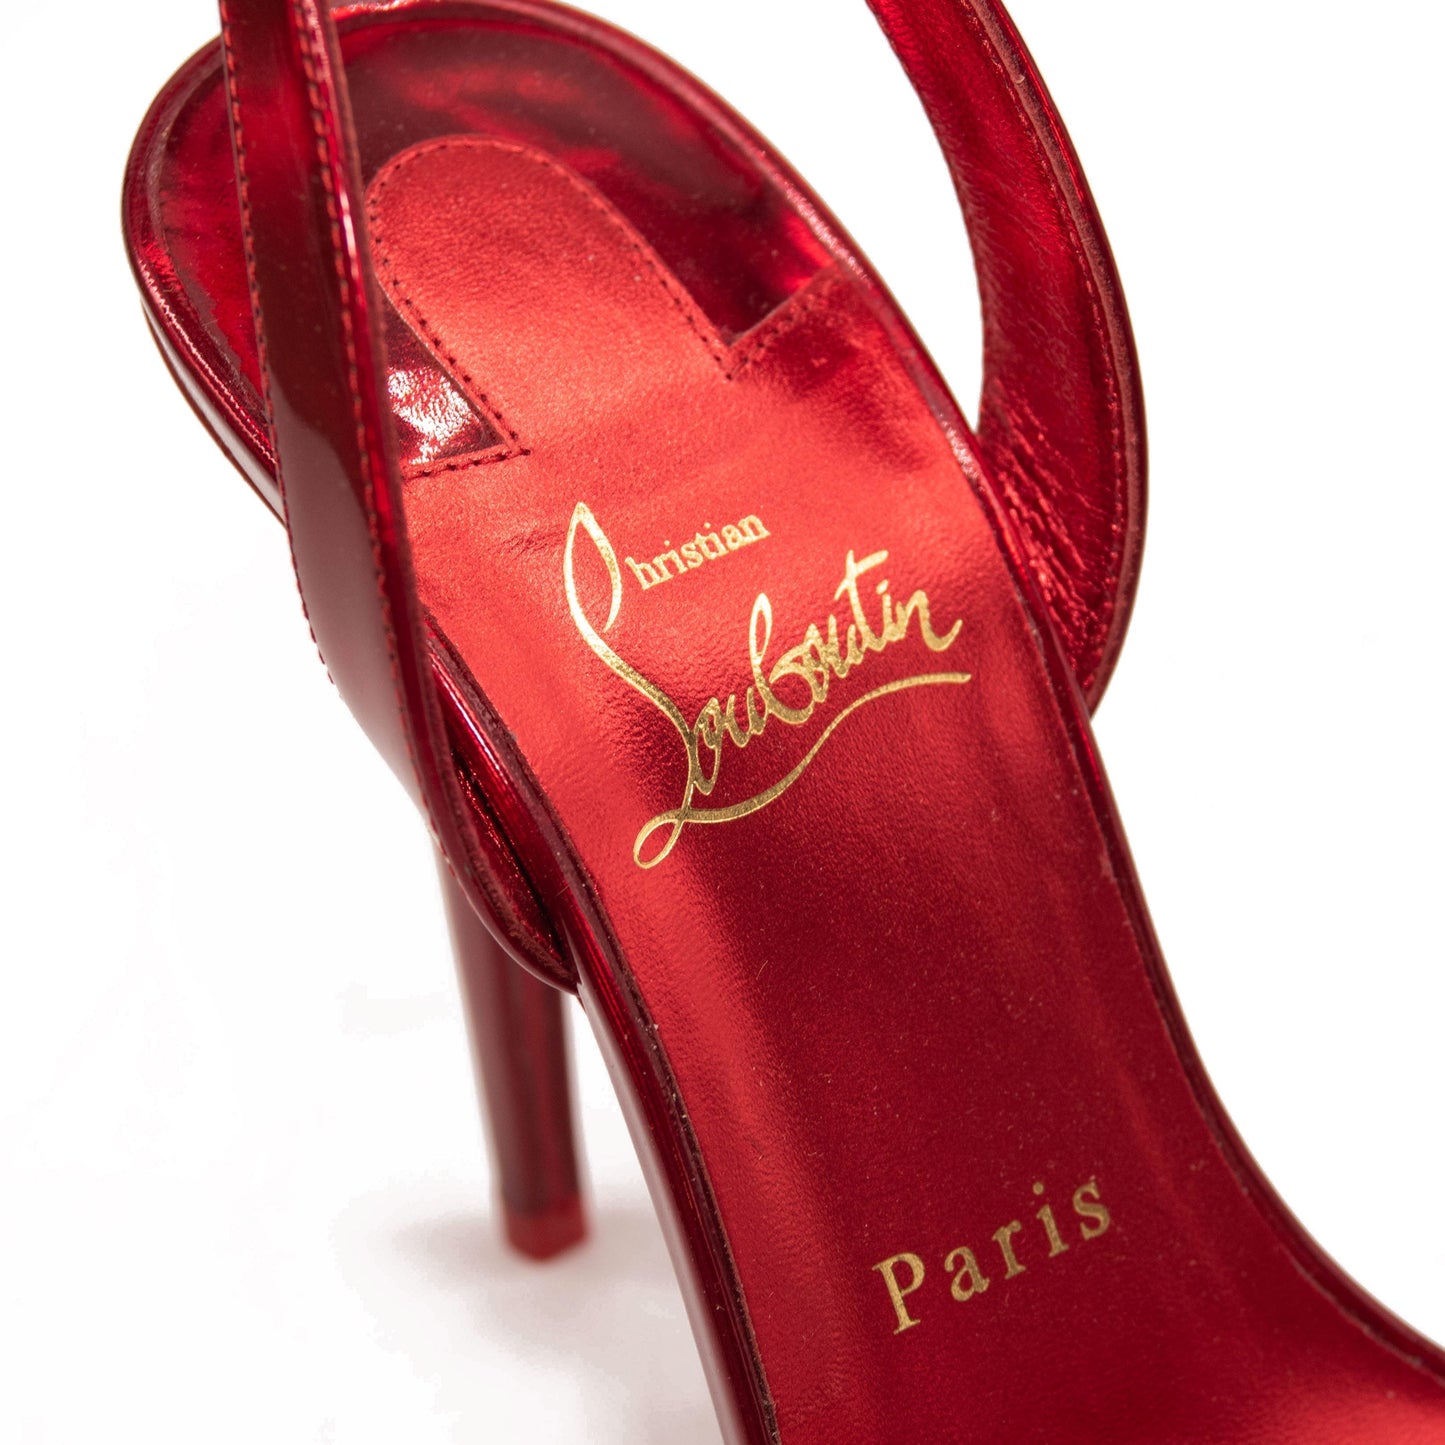 NEW Christian Louboutin Astrid Slingback Sandal Red Metallic Size 38 EU